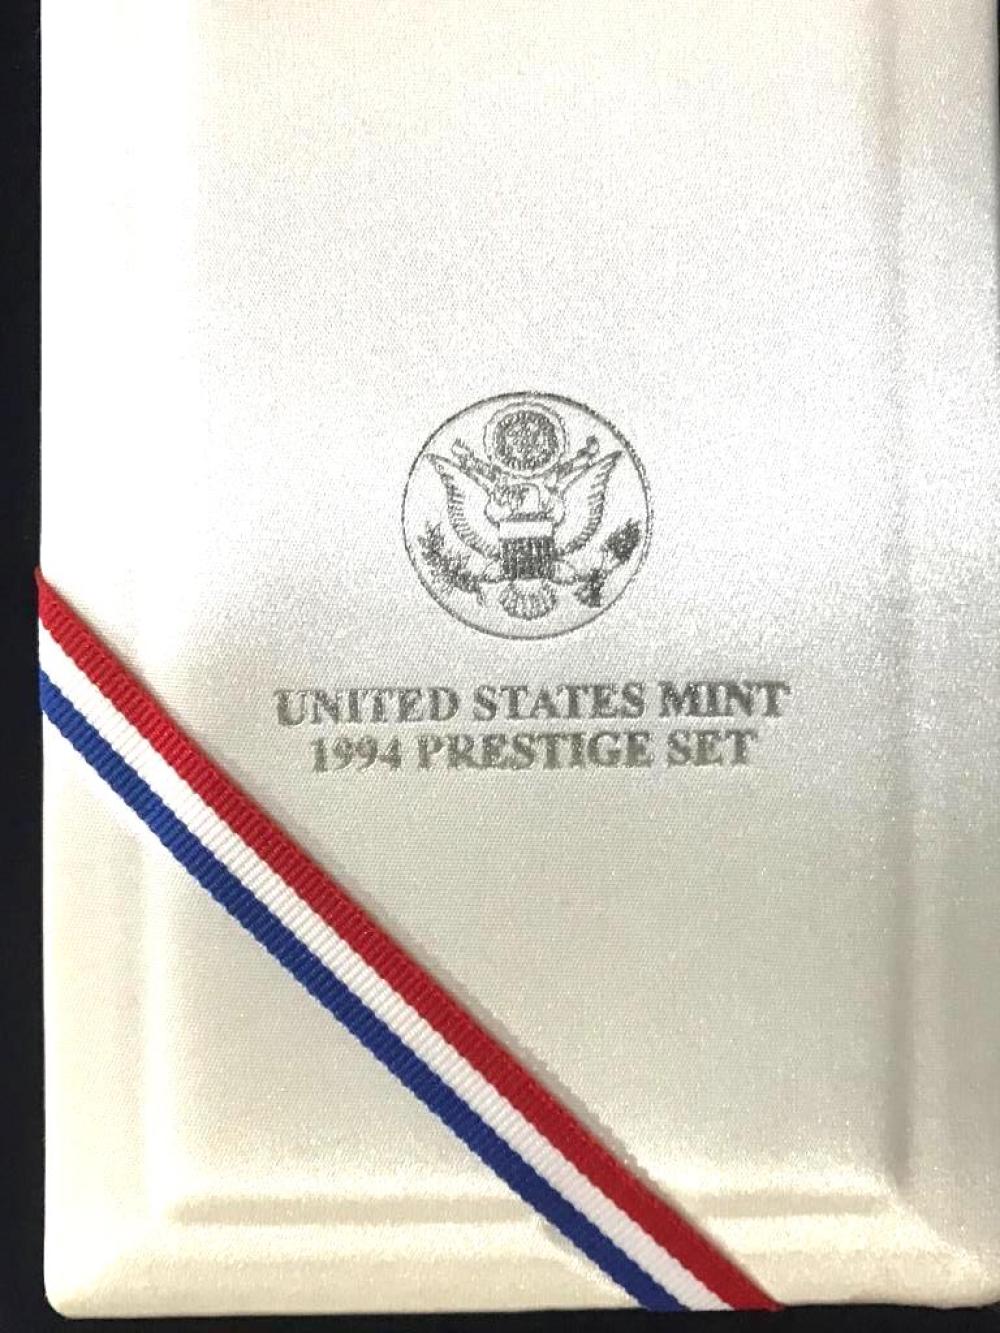 United States mint 1994 prestige set 